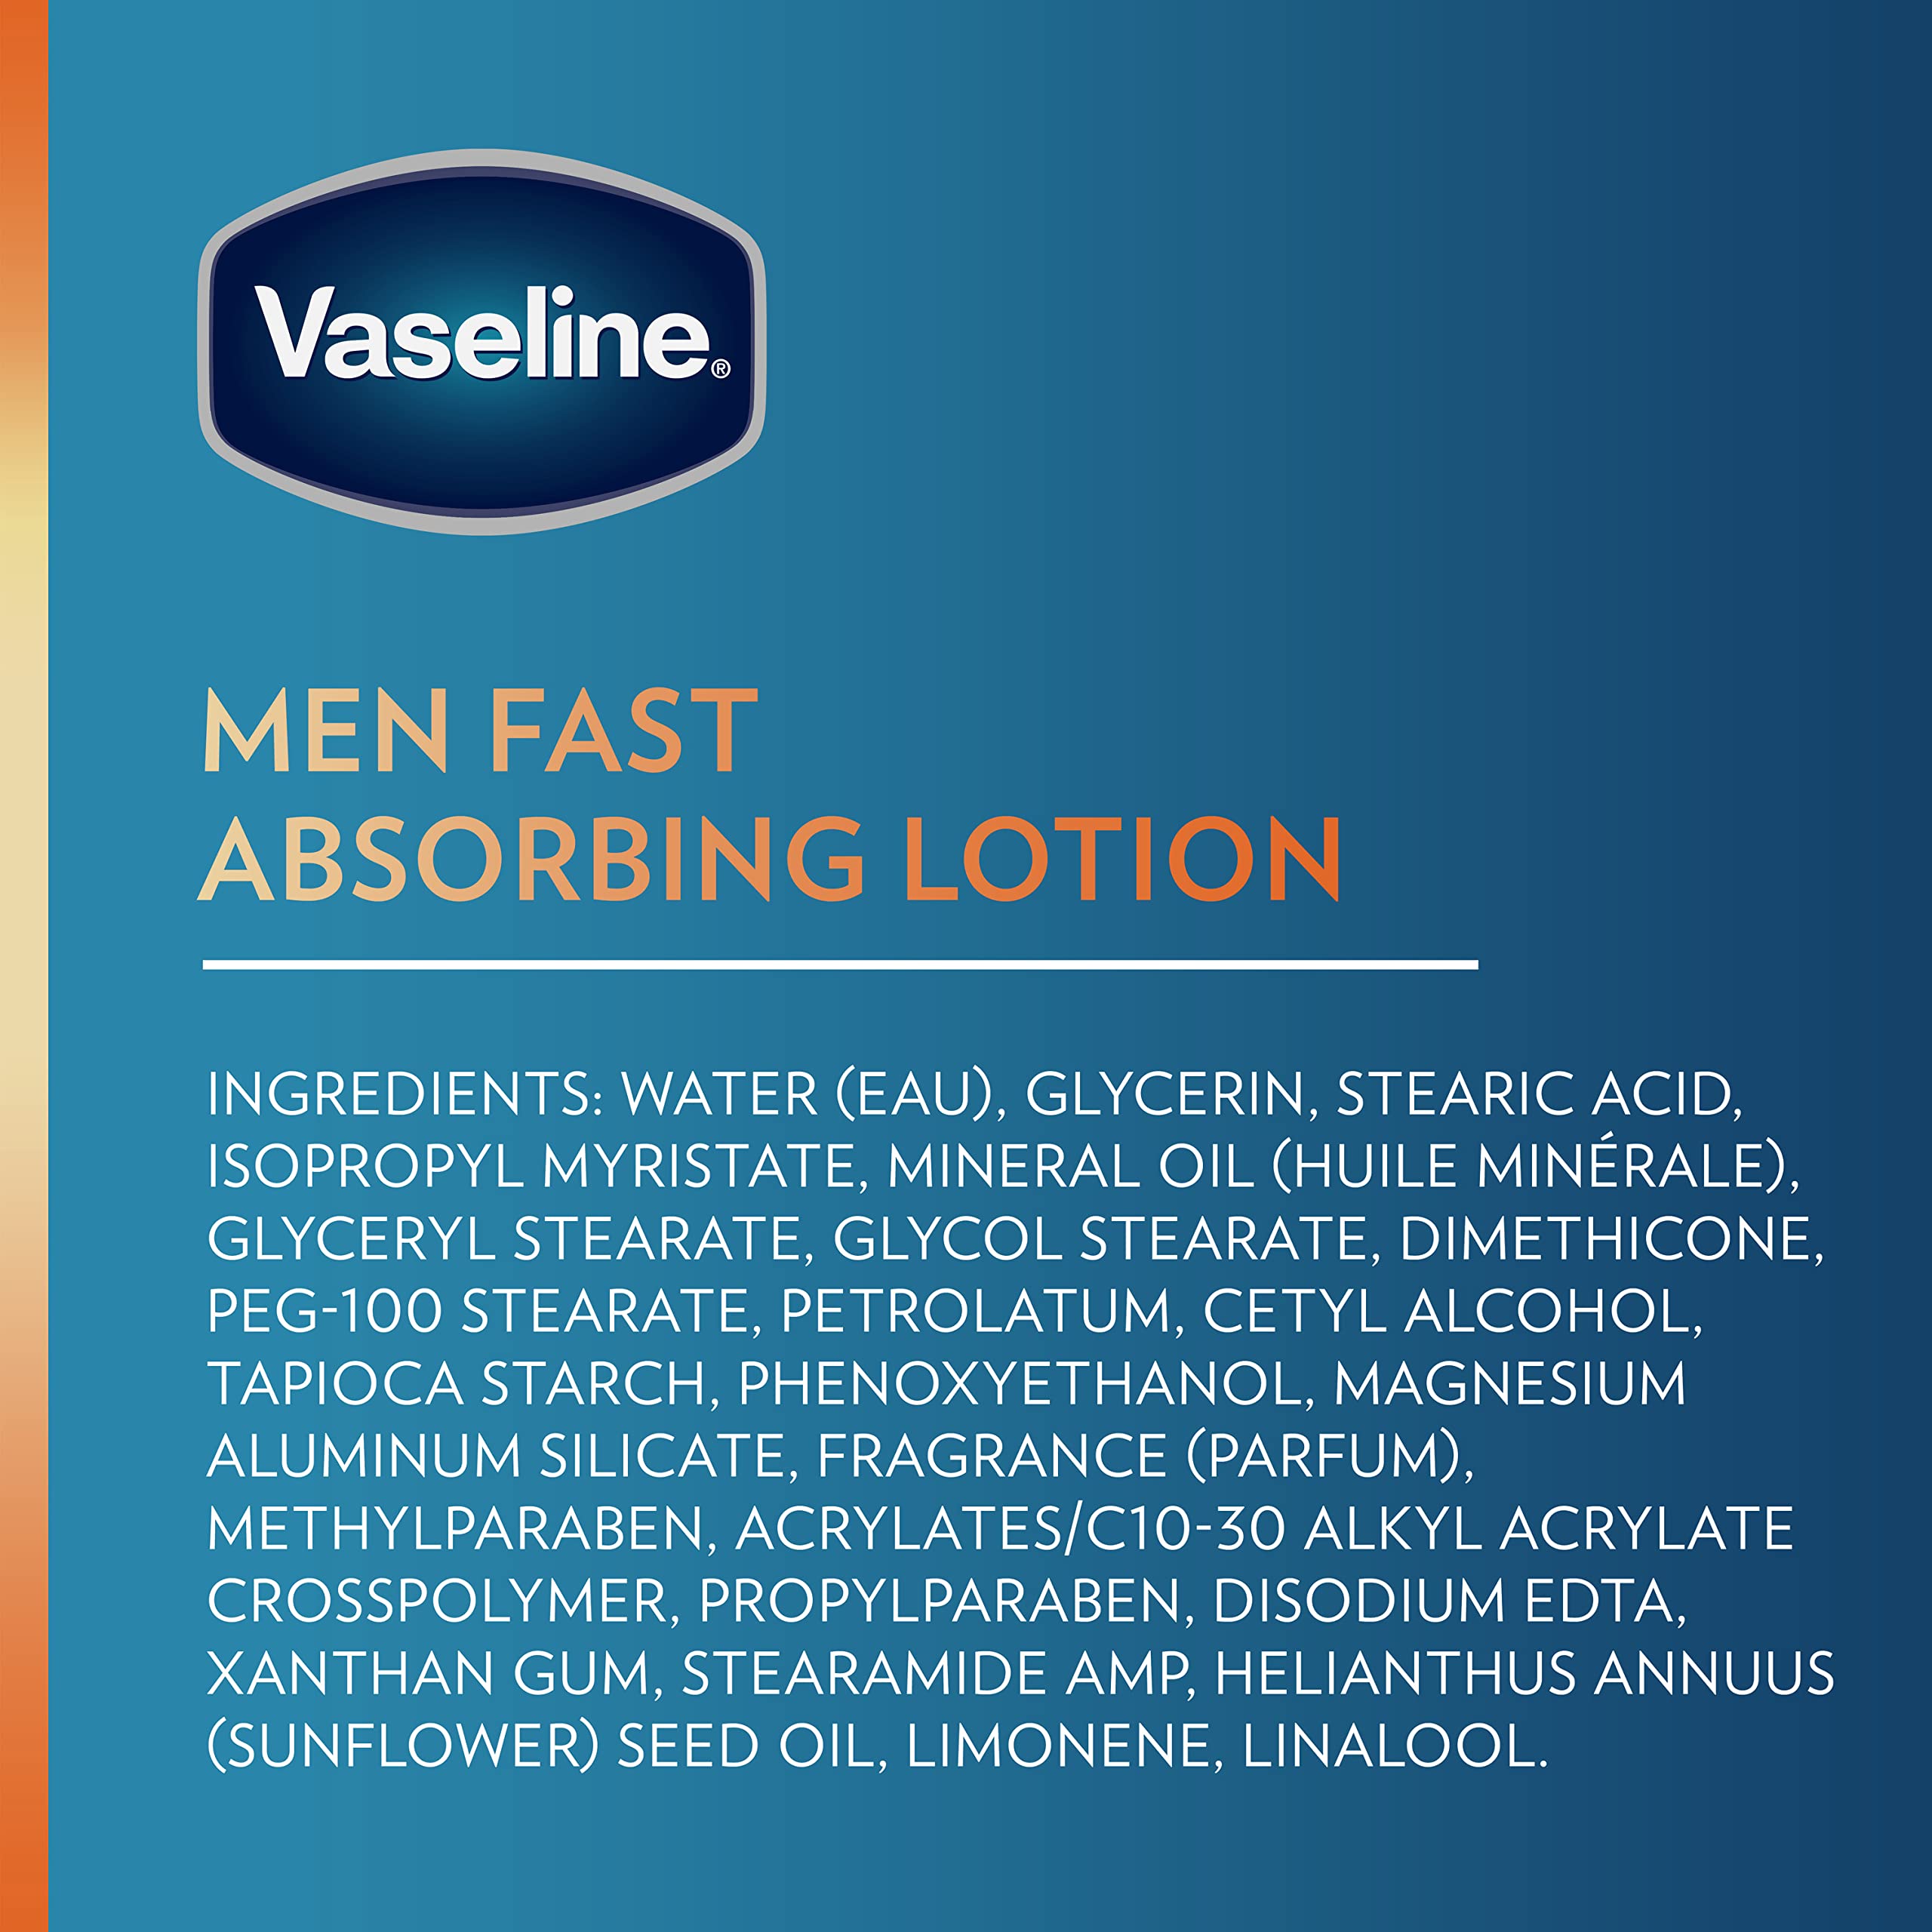 Vaseline Men Hand & Body Lotion Healing Moisture 4 ct For Dry or Cracked Skin Non-Greasy 20.3 oz